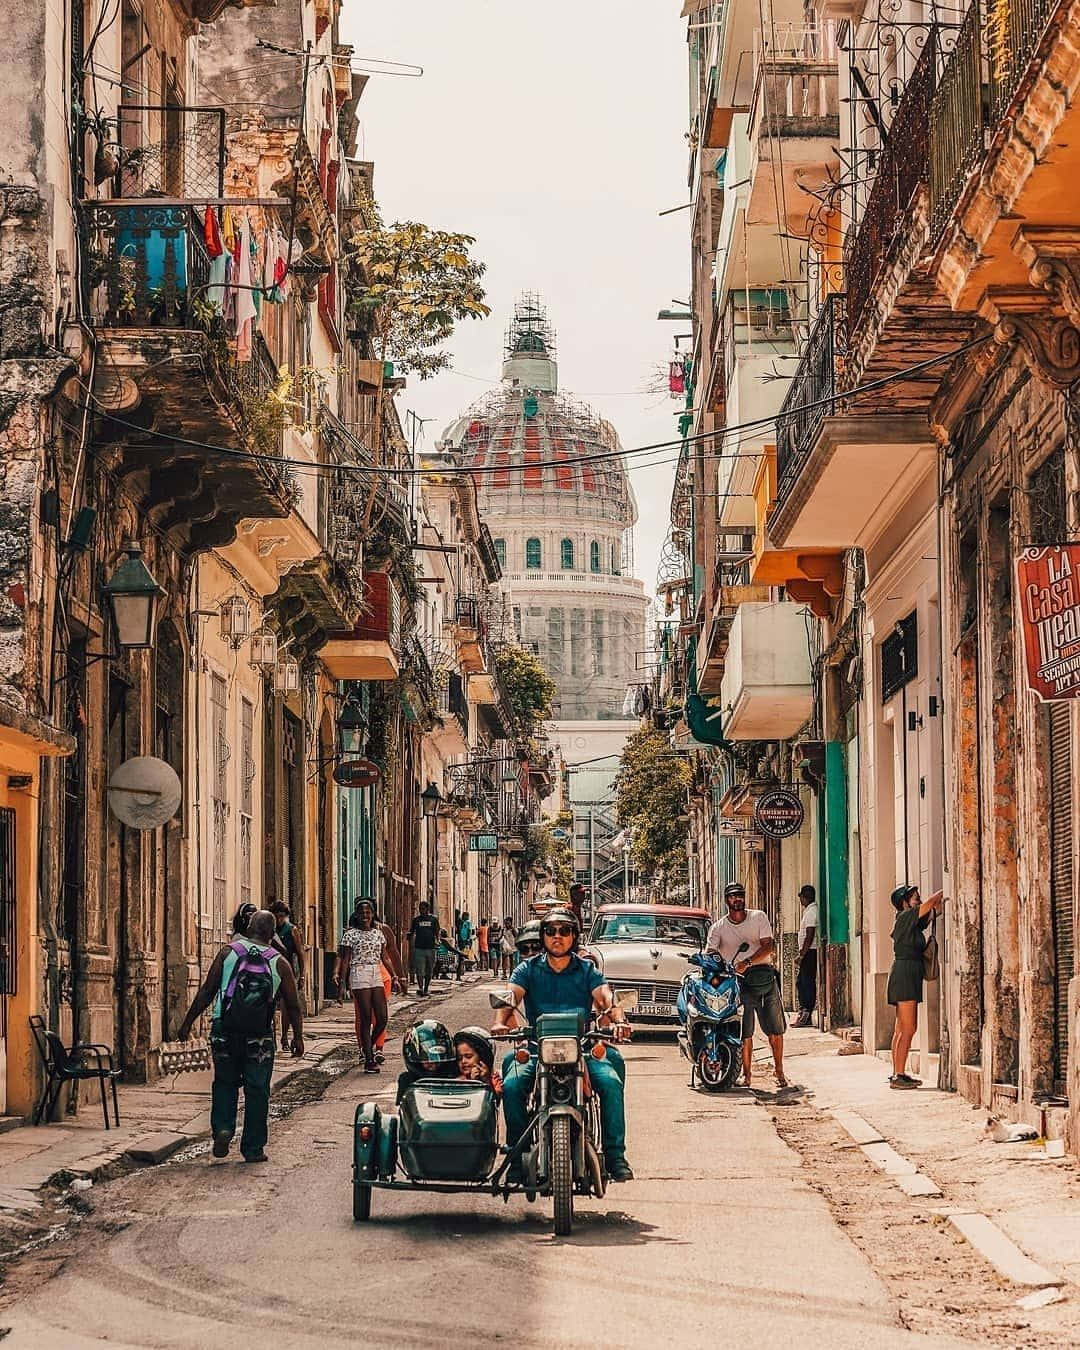 Streets of Old Havana, Cuba